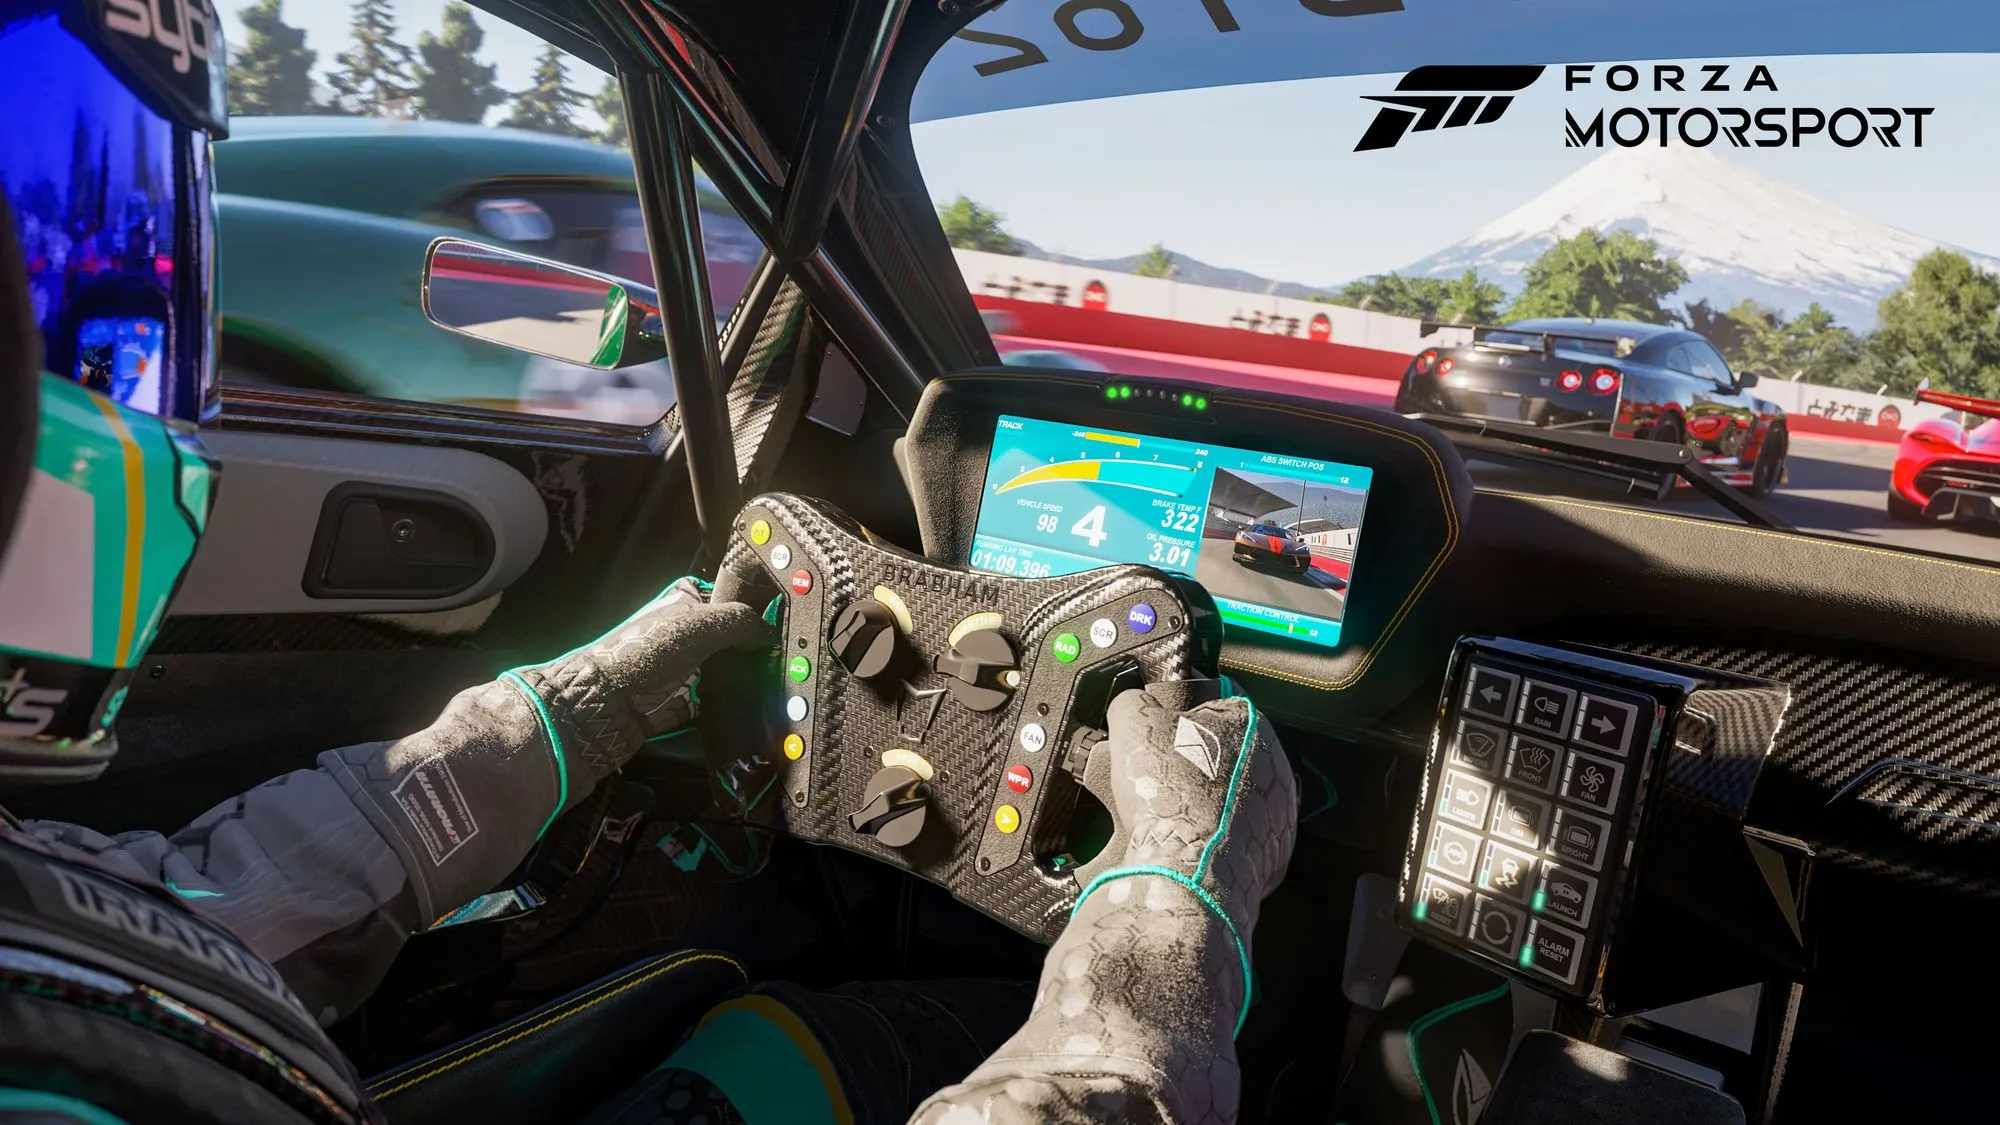 Forza-Motorsport-vue-cockpit